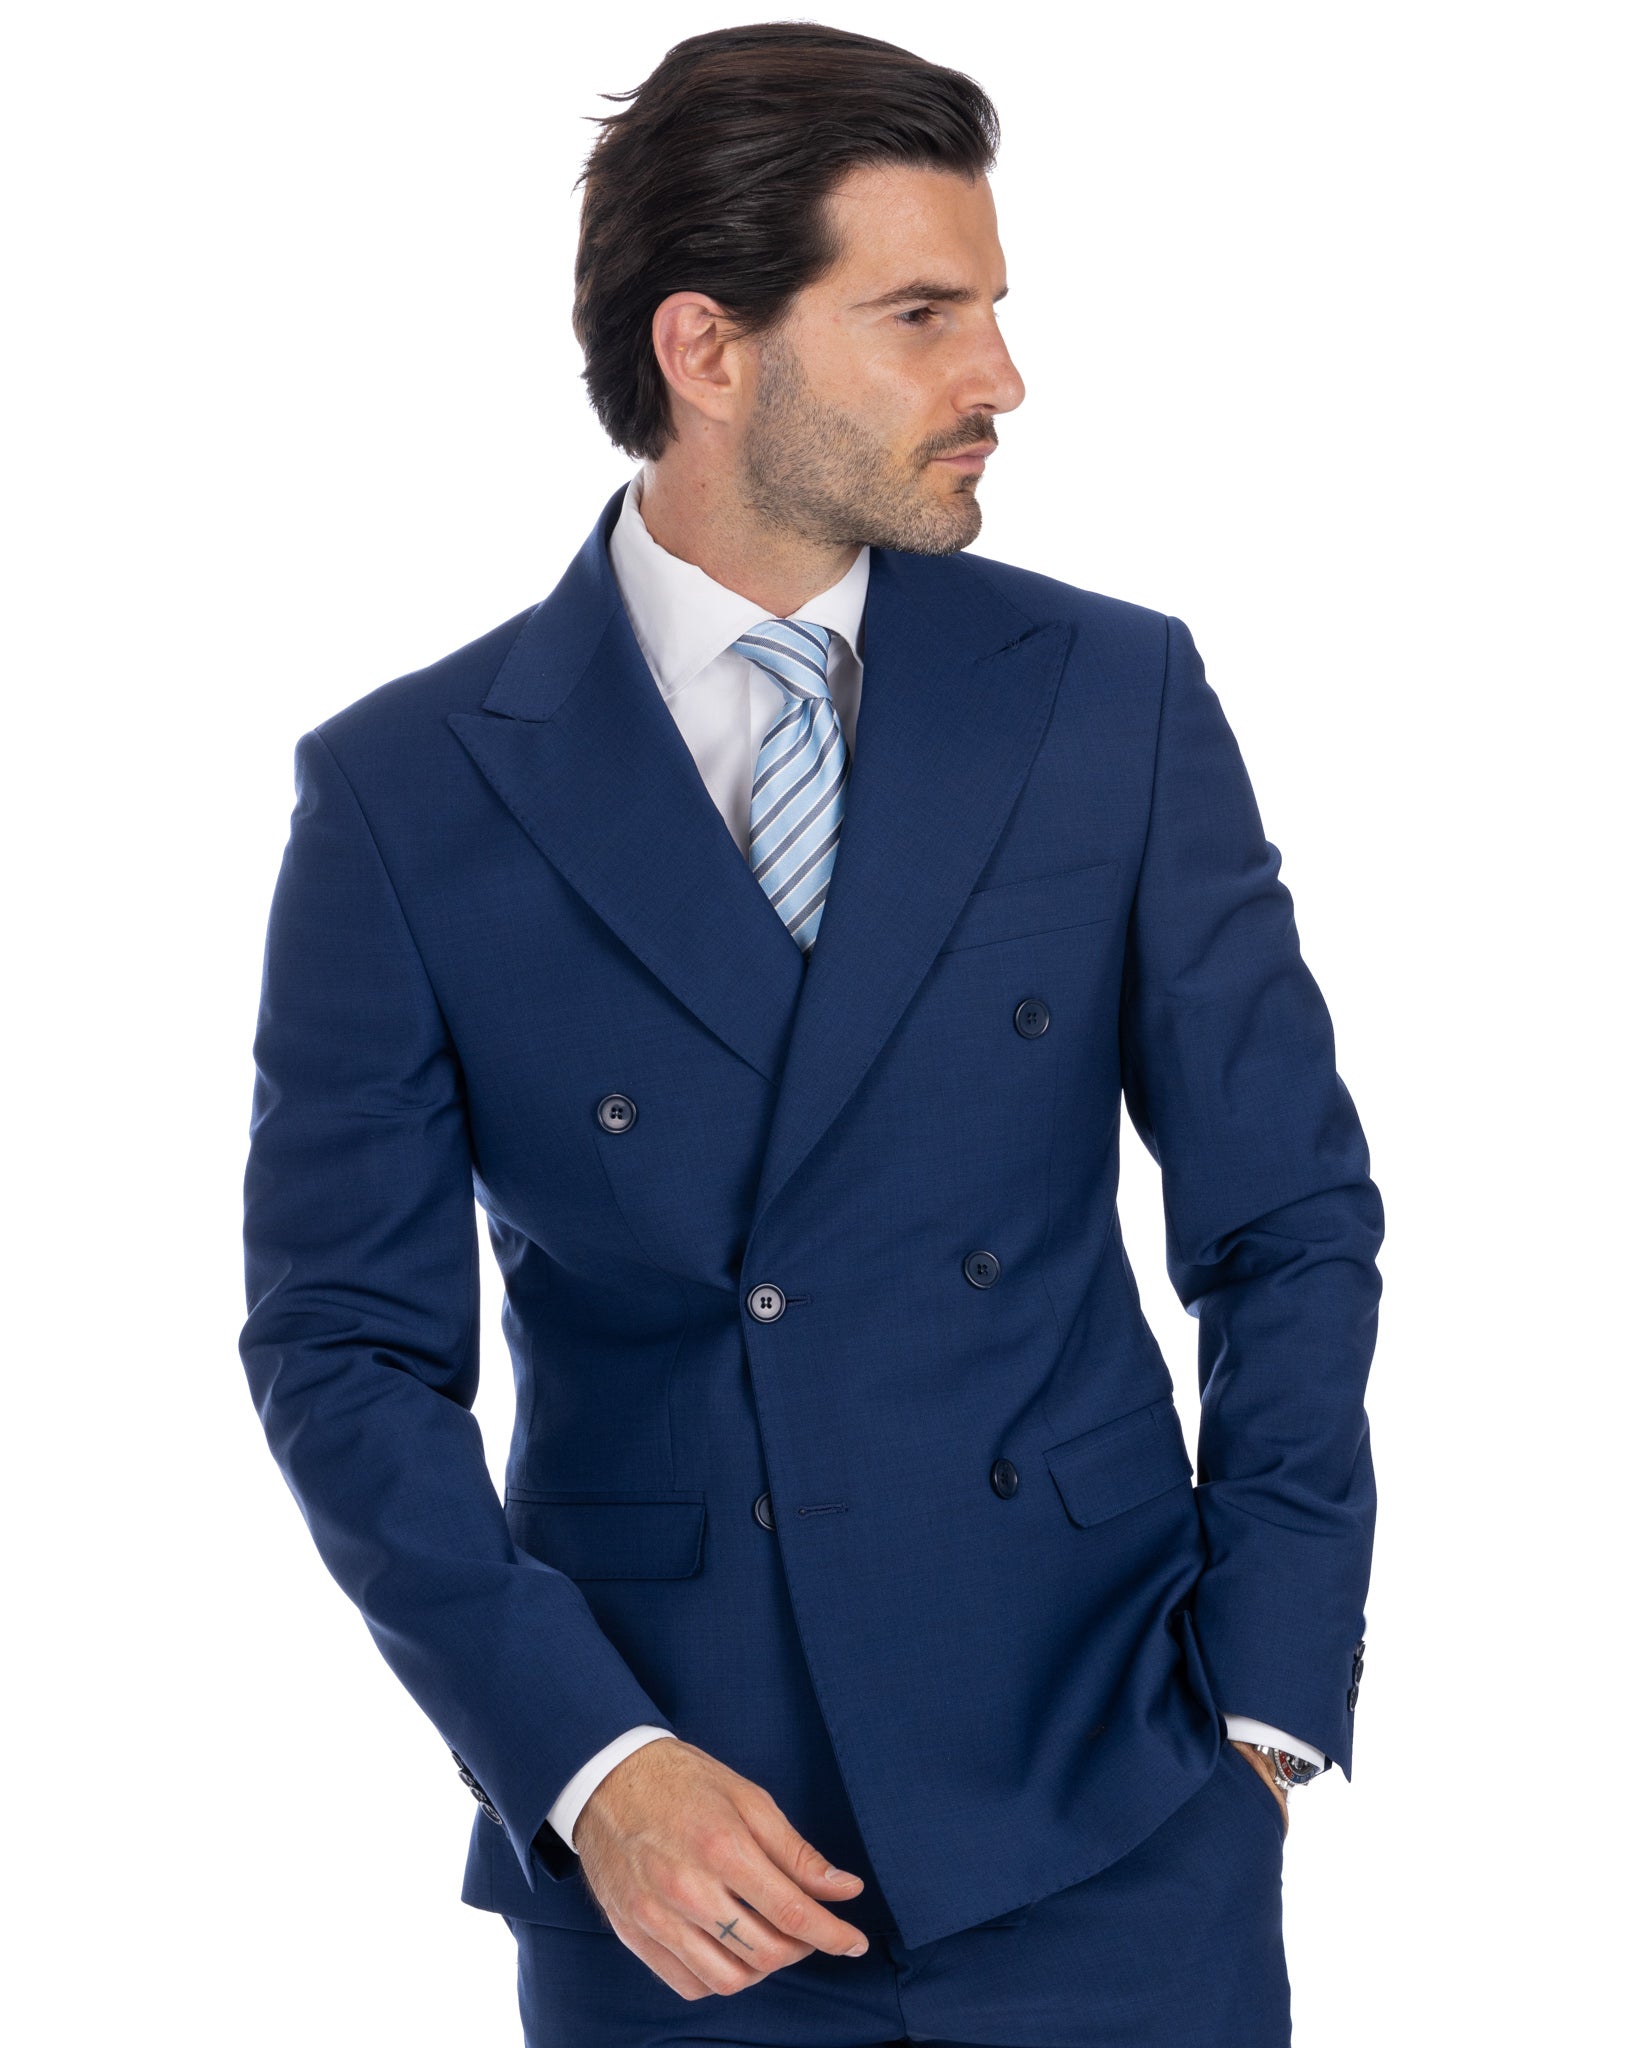 Brooklyn - blue double-breasted wool jacket